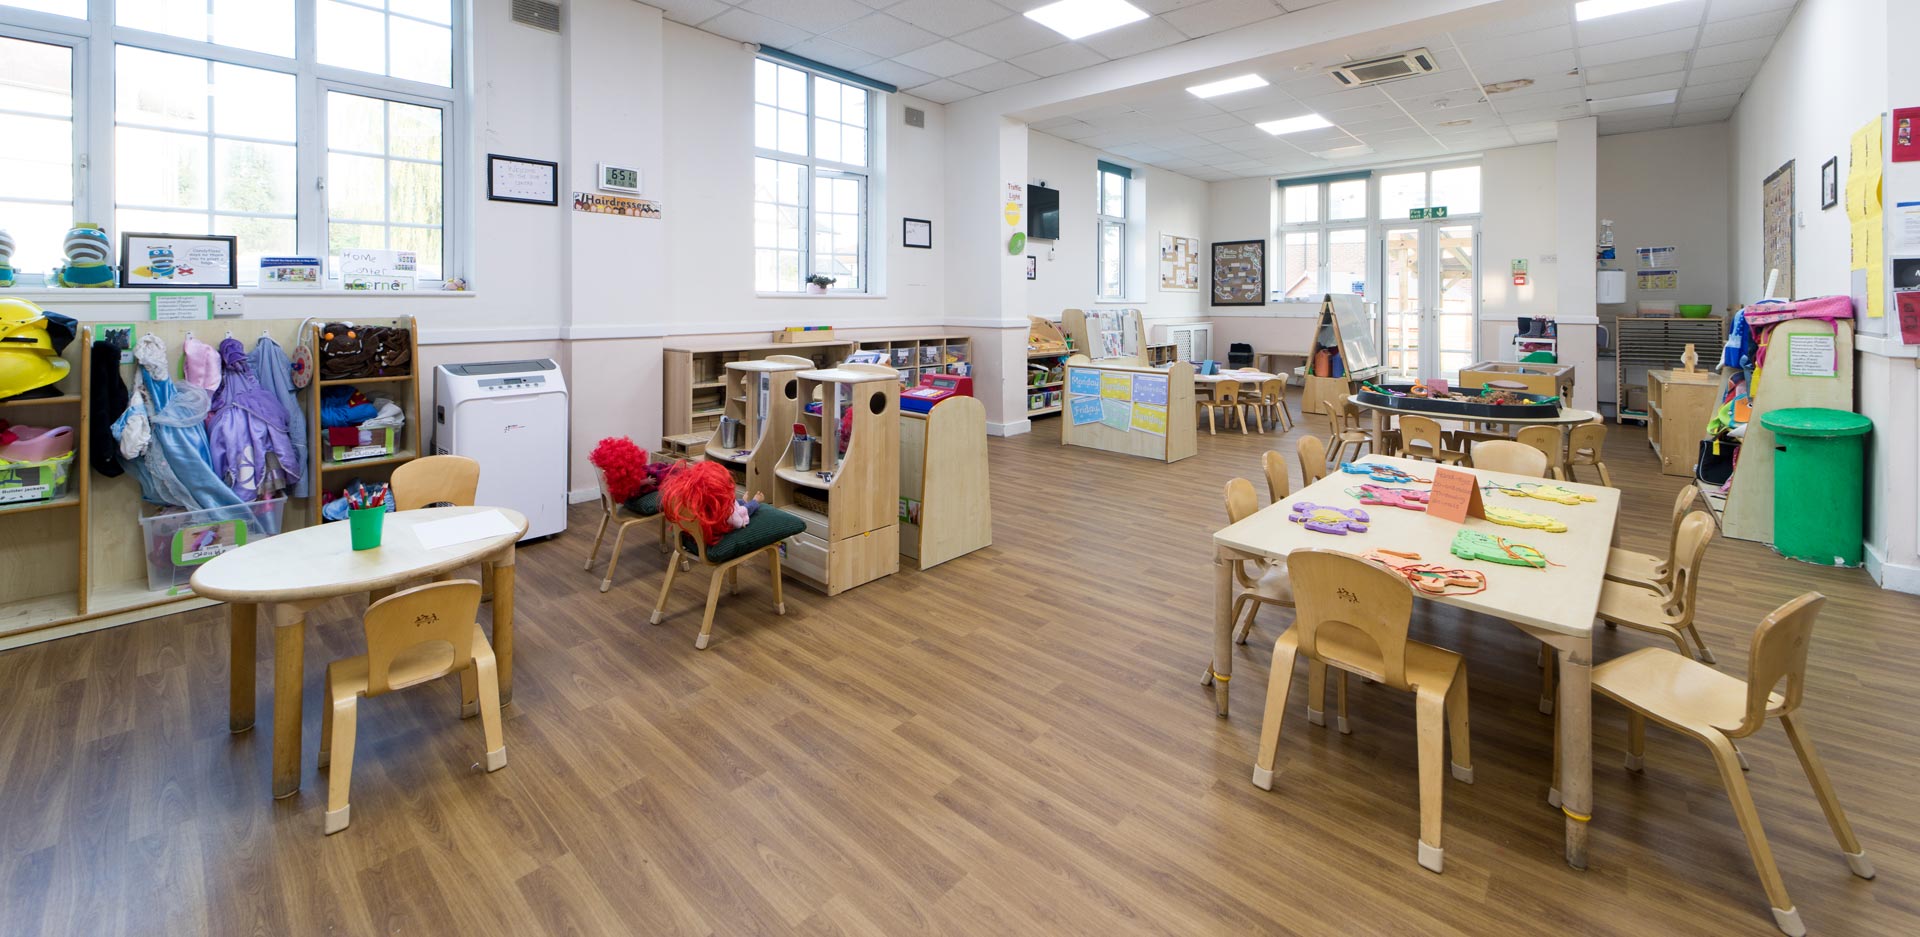 Kenton Day Nursery and Preschool